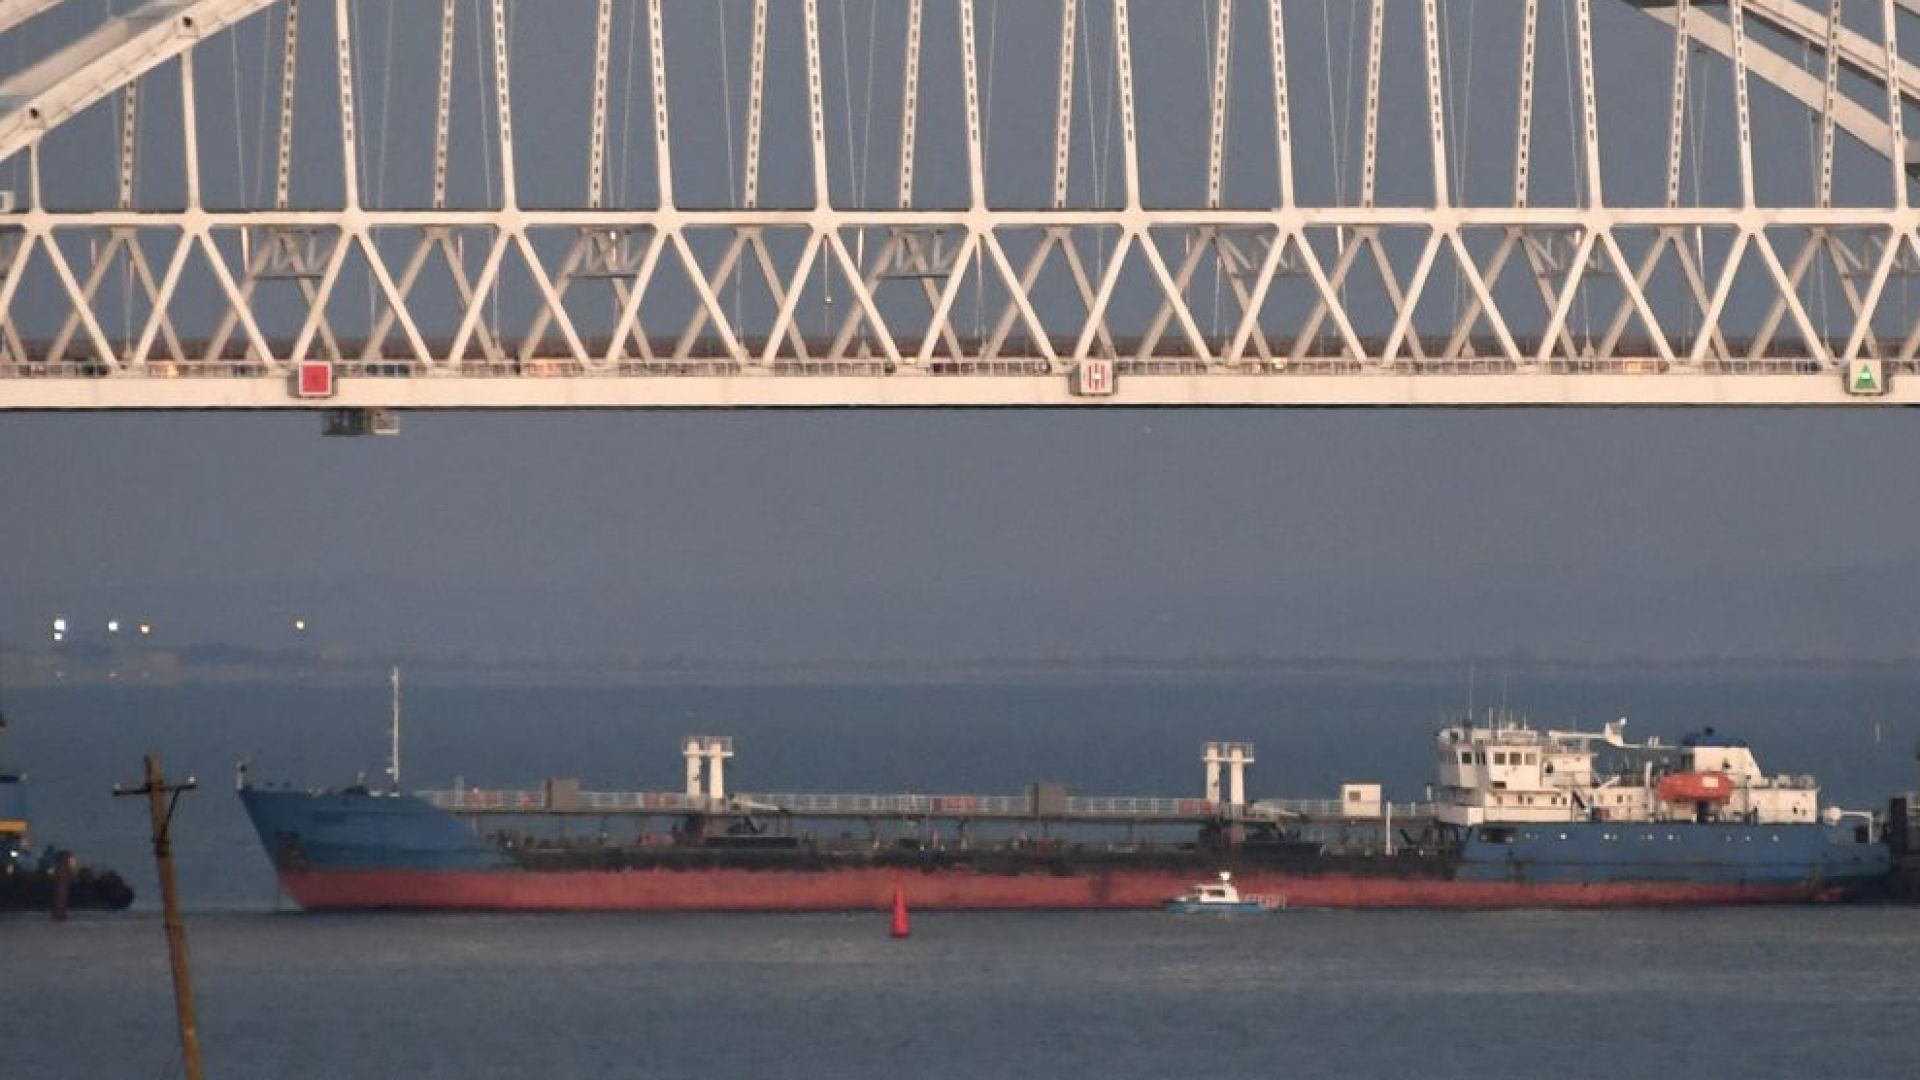 Украинските власти са освободили екипажа на руския танкер задържан в